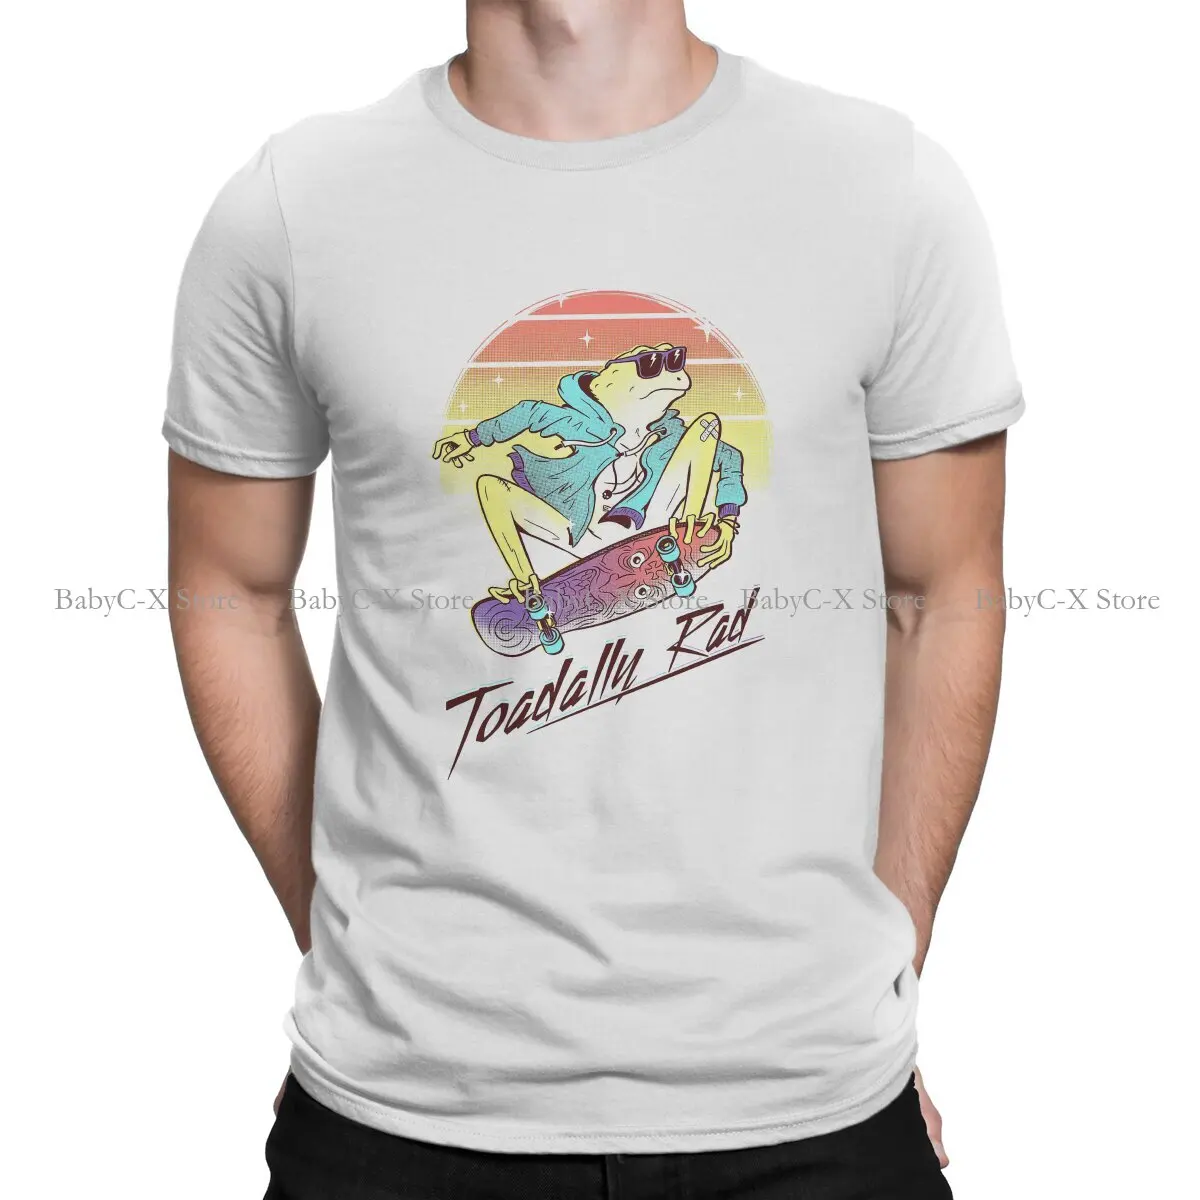 Toadally Rad Special Polyester TShirt Skateboard Skate Skateboarding Top Quality Hip Hop Graphic  T Shirt Stuff